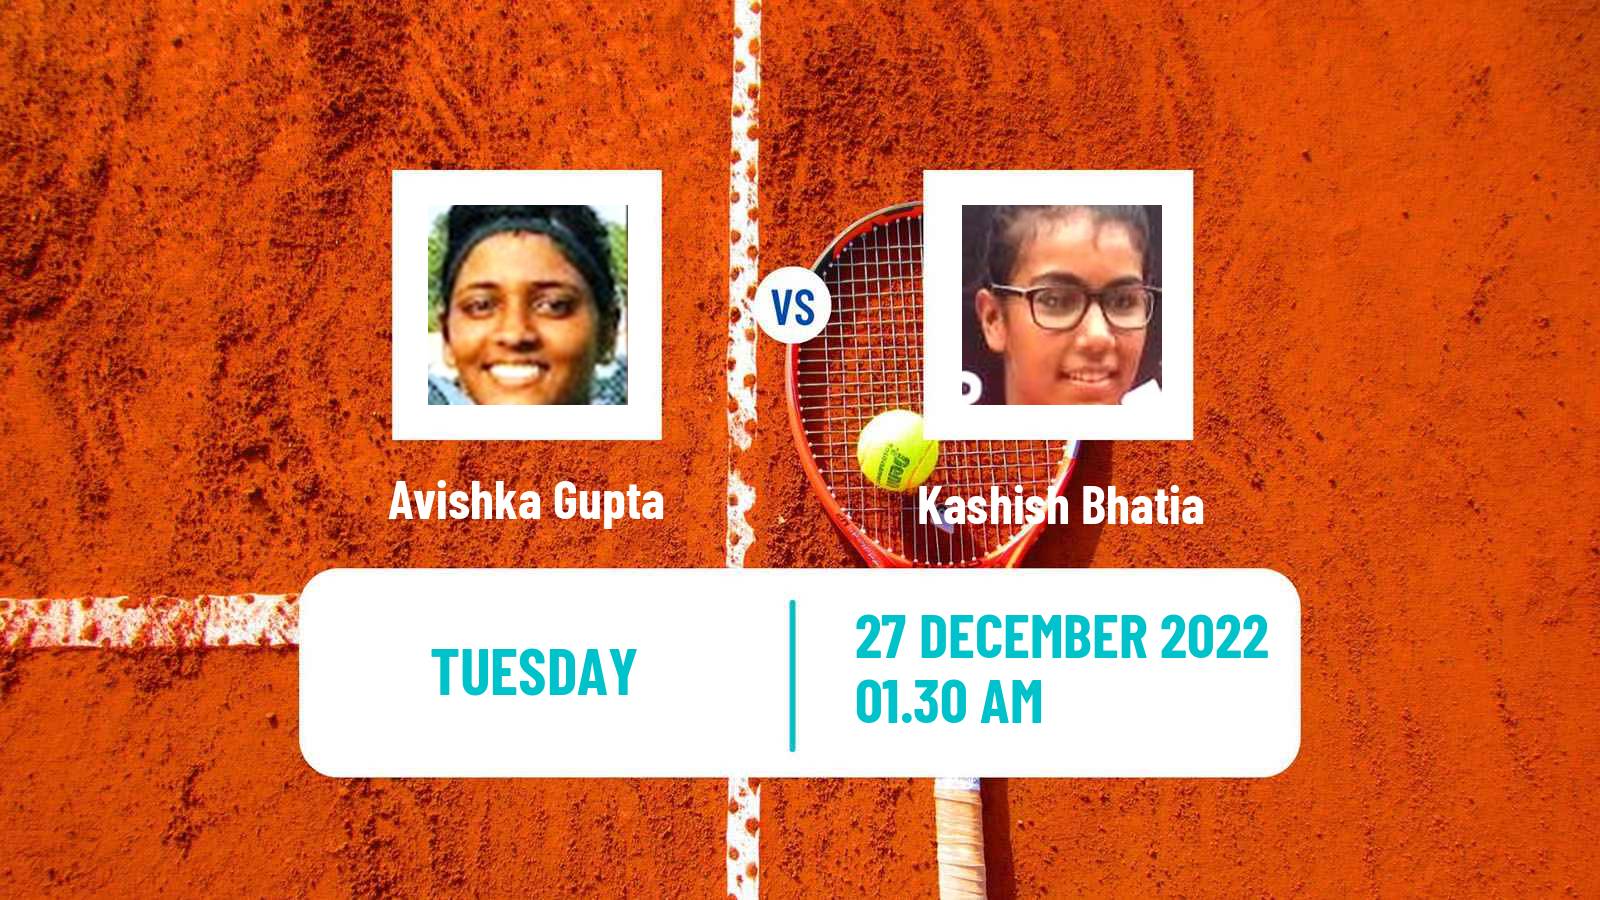 Tennis ITF Tournaments Avishka Gupta - Kashish Bhatia